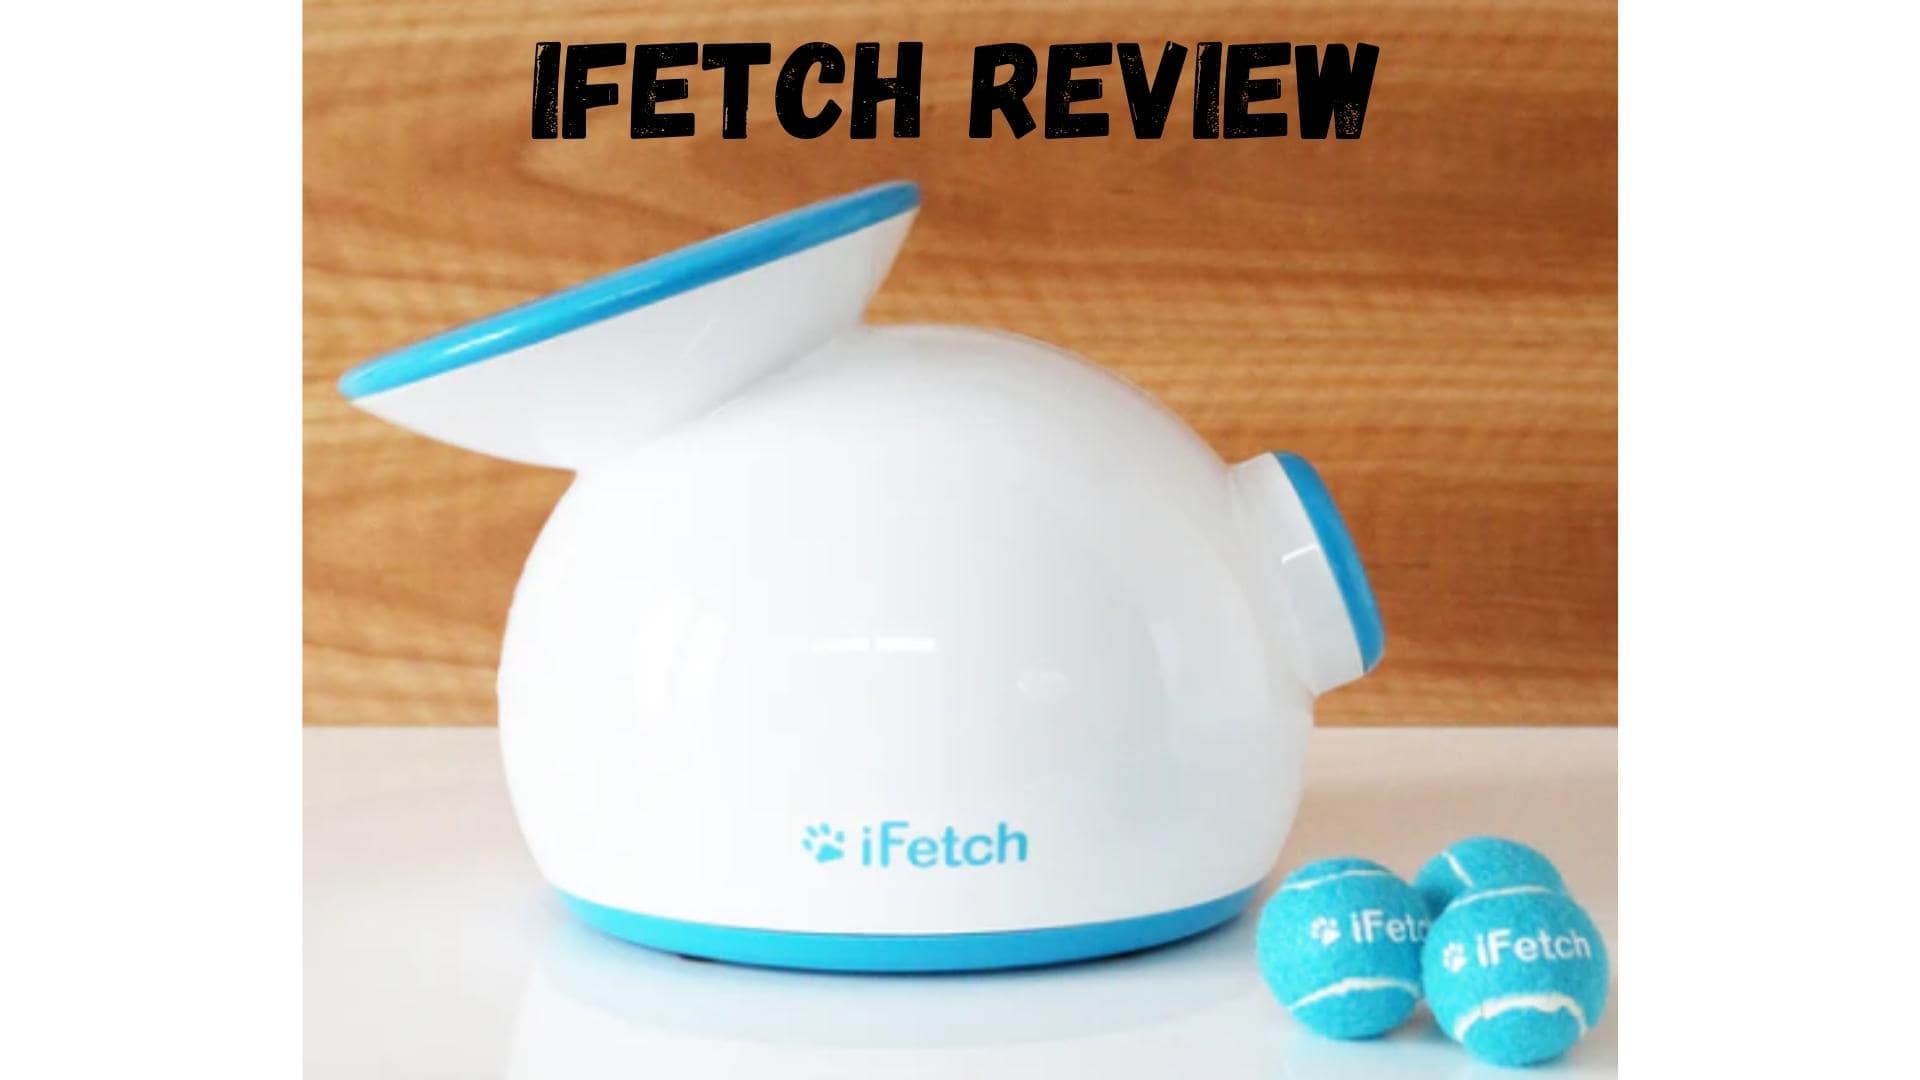 ifetch ball launcher review